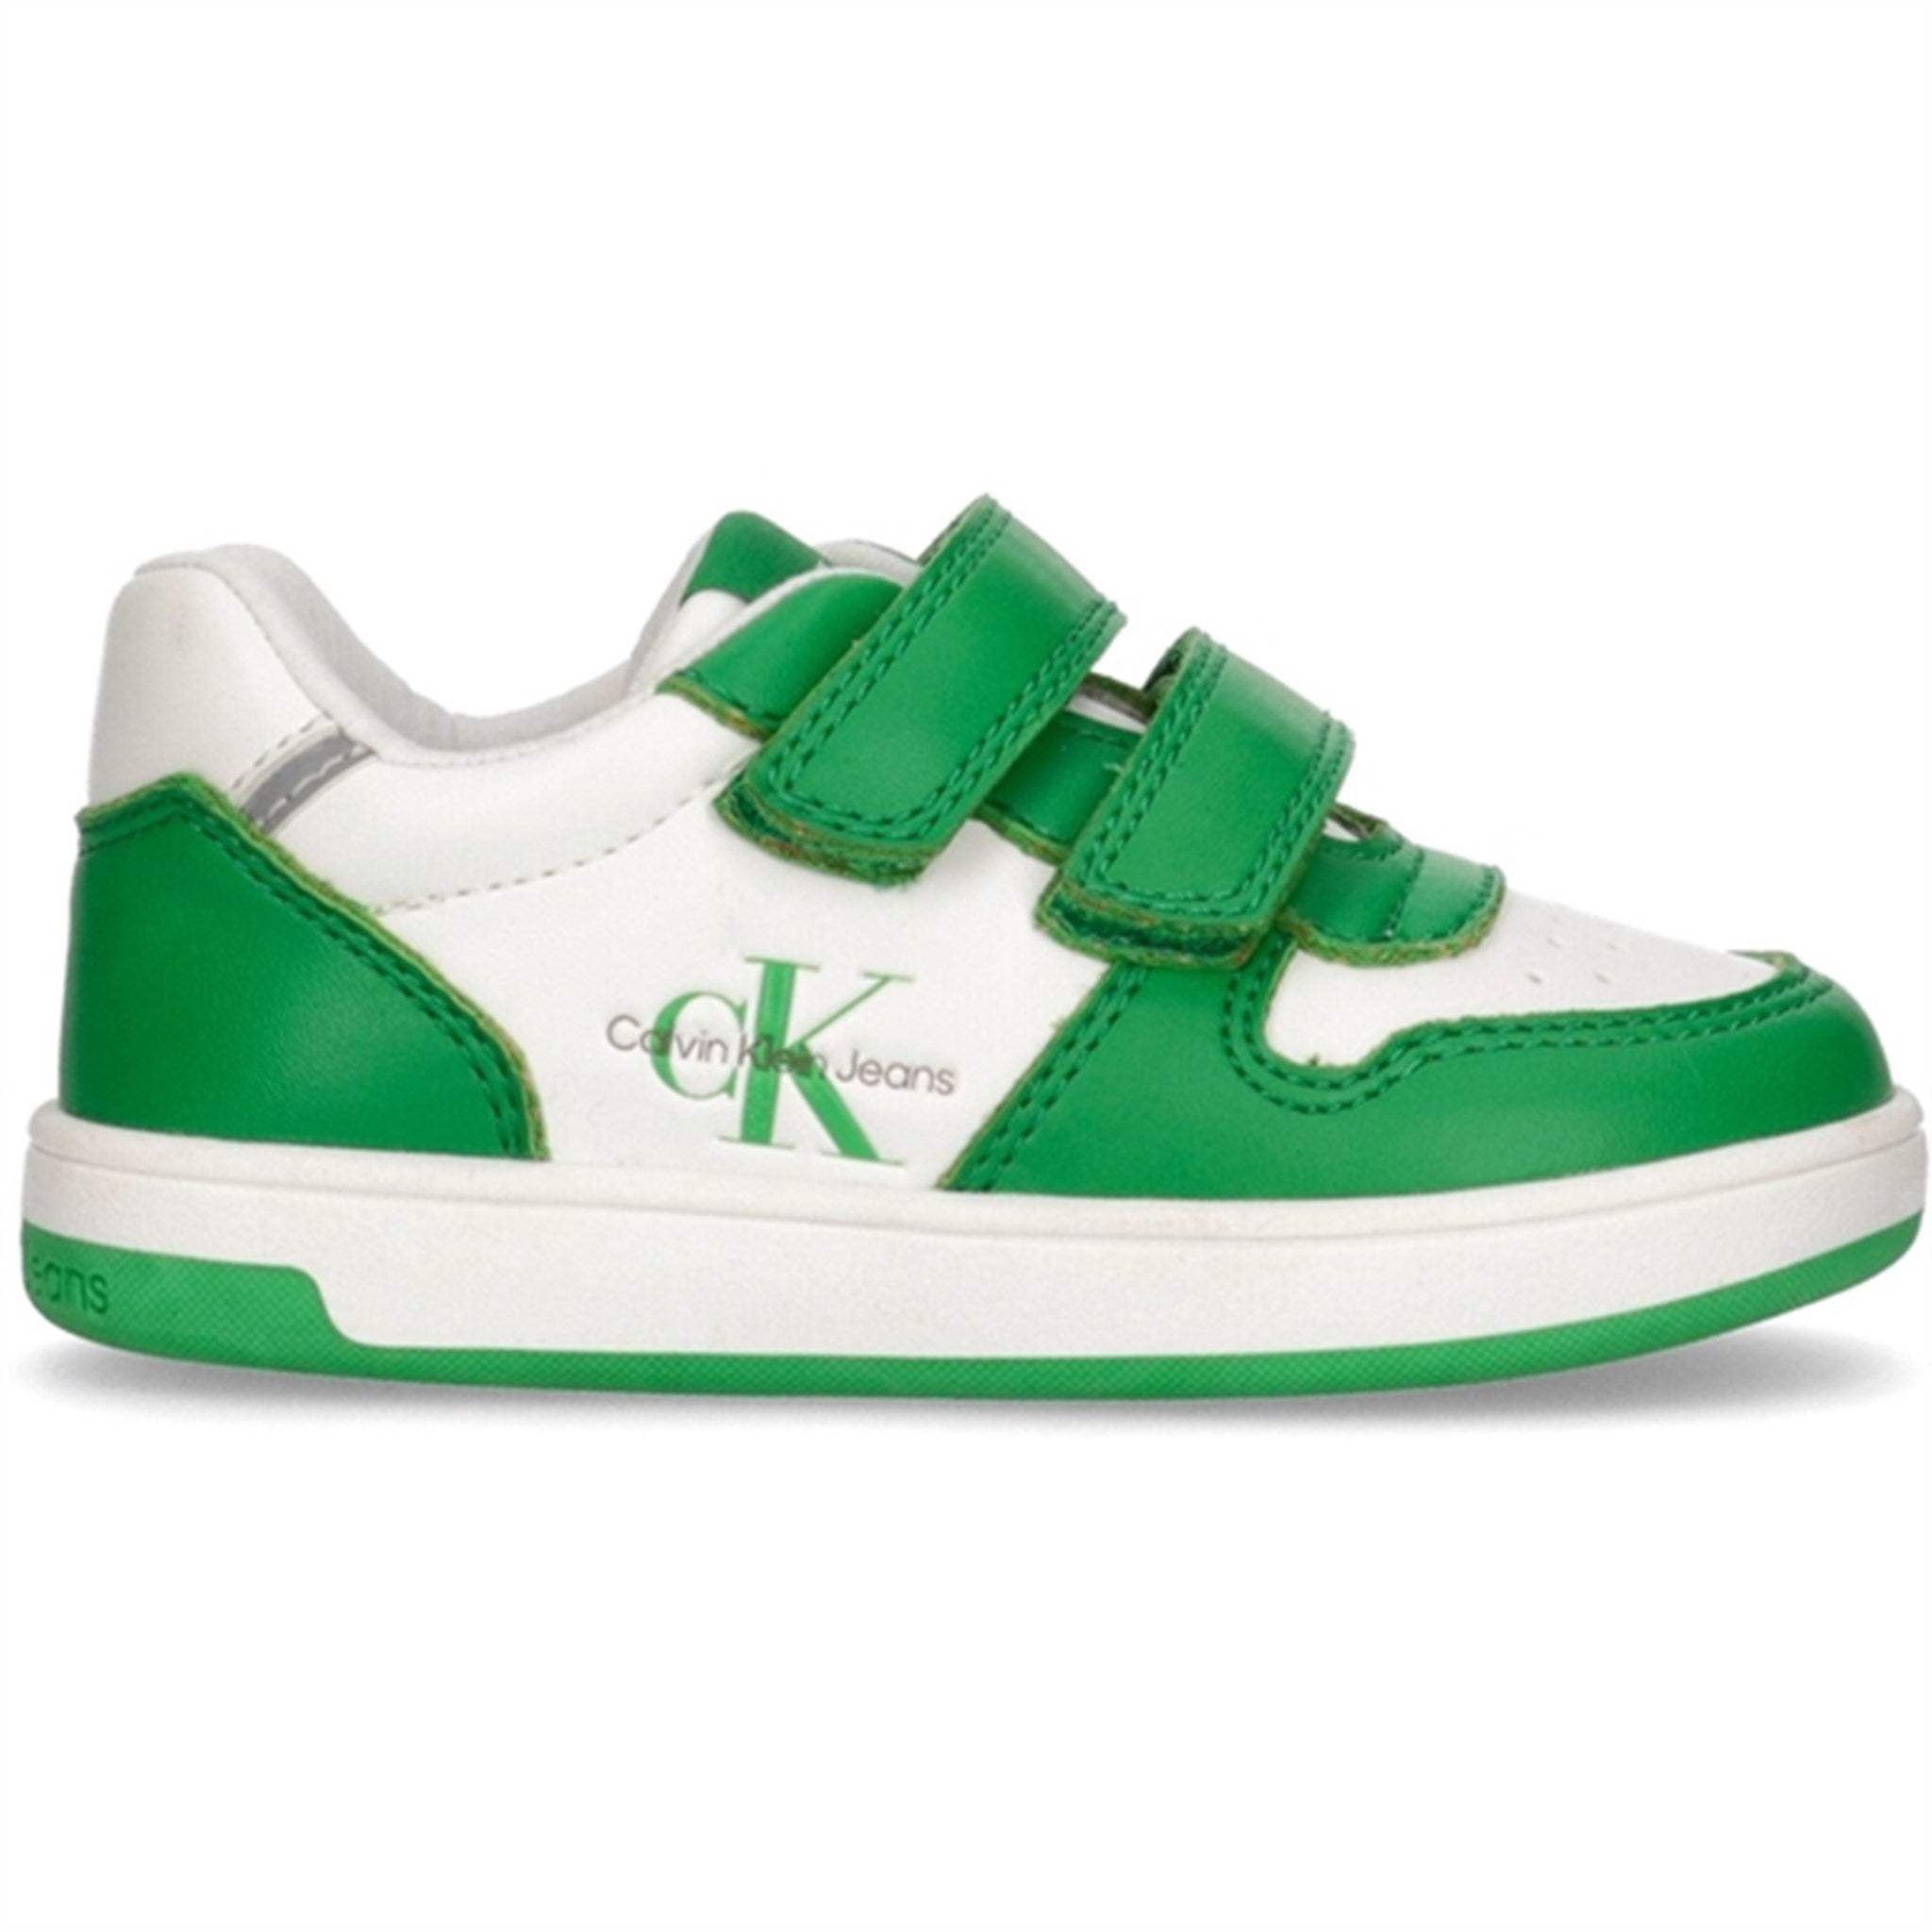 Calvin Klein Low Cut Velcro Sneakers Green/White 3